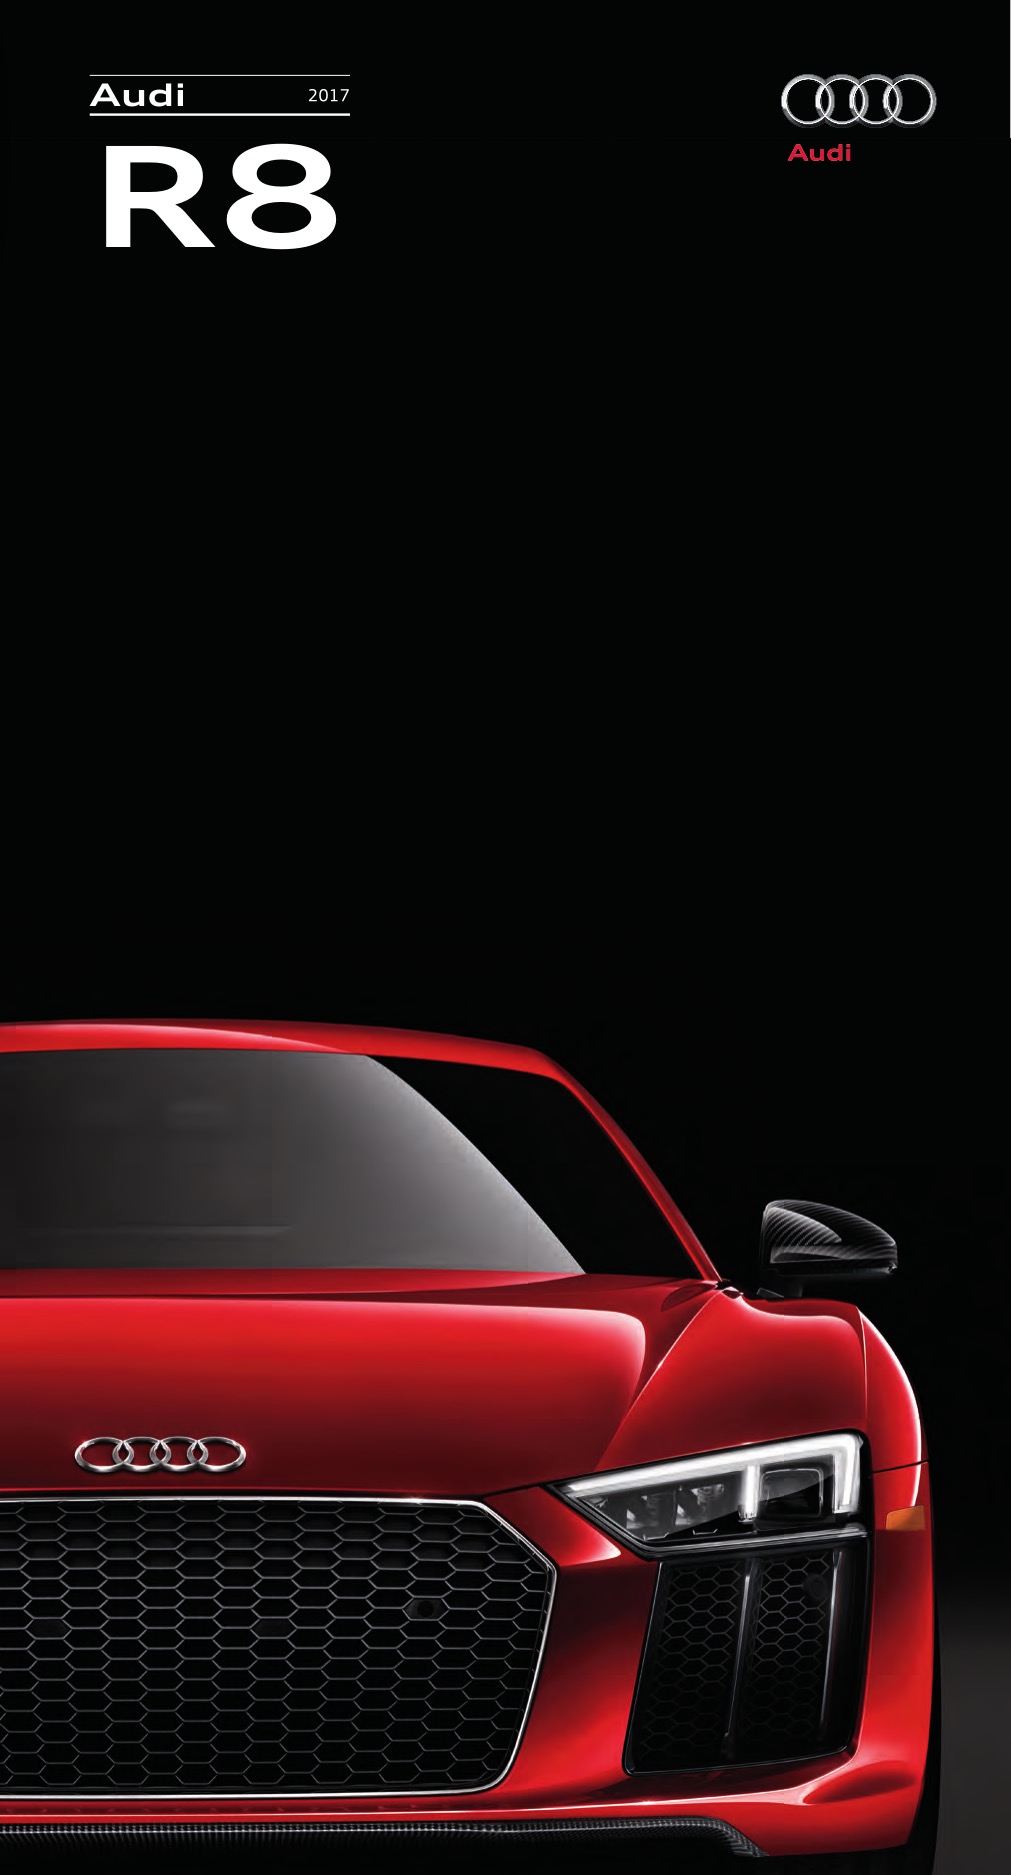 2017 Audi R8 Brochure